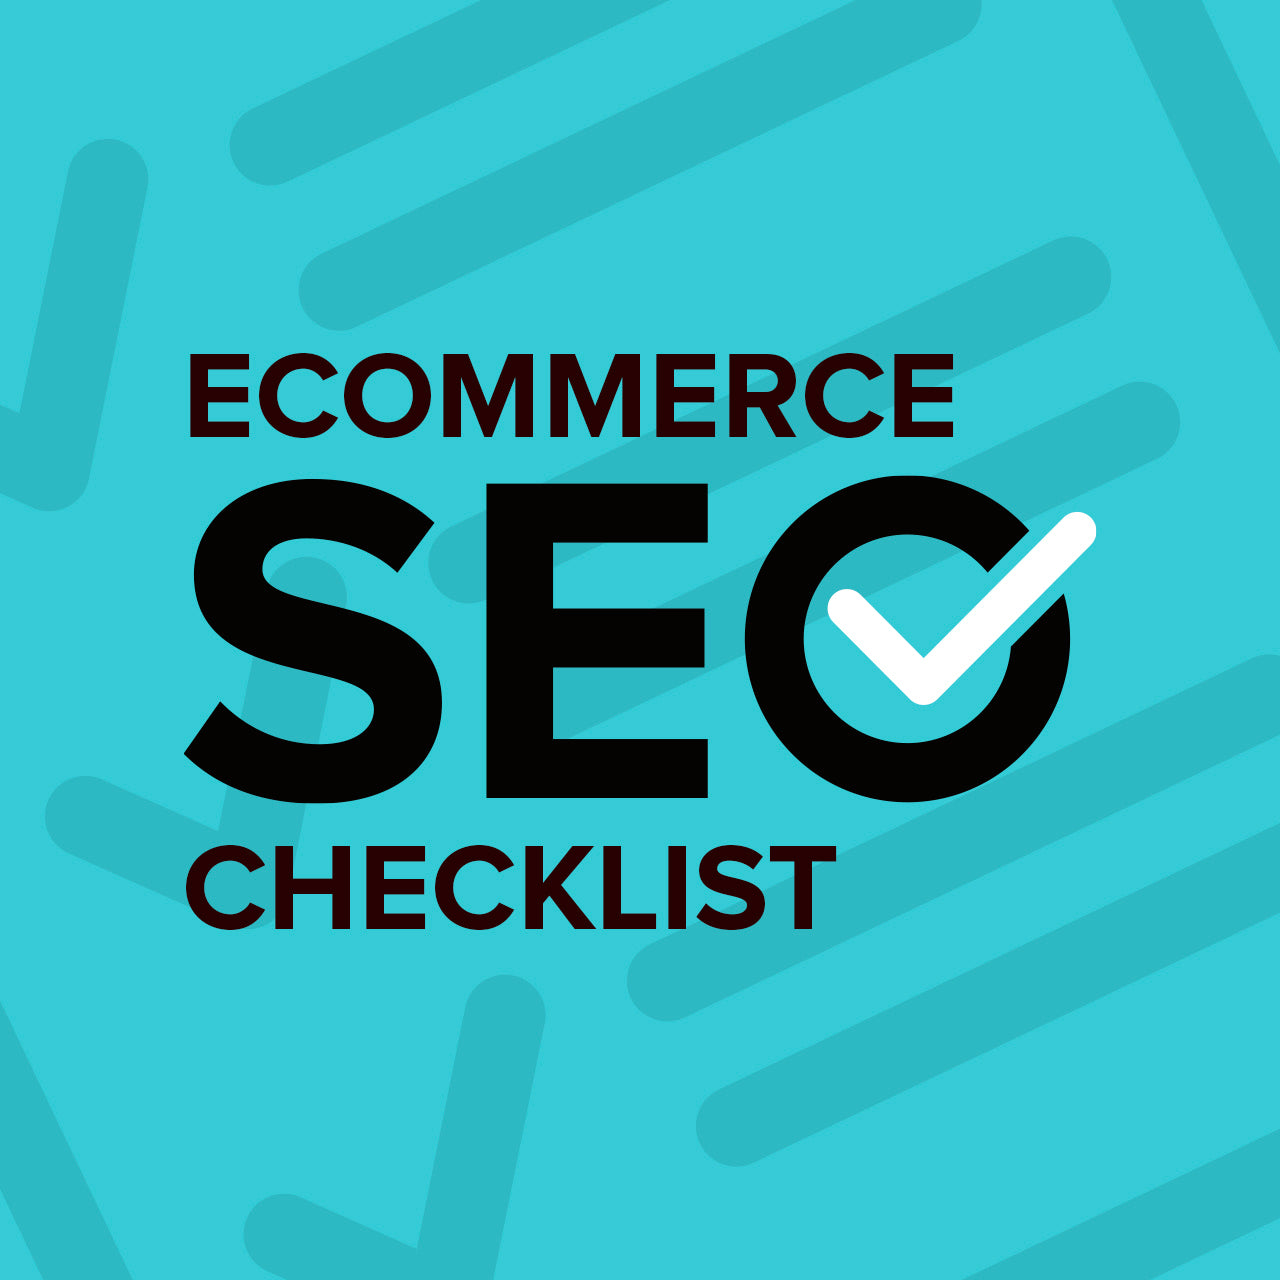 eCommerce SEO Checklist